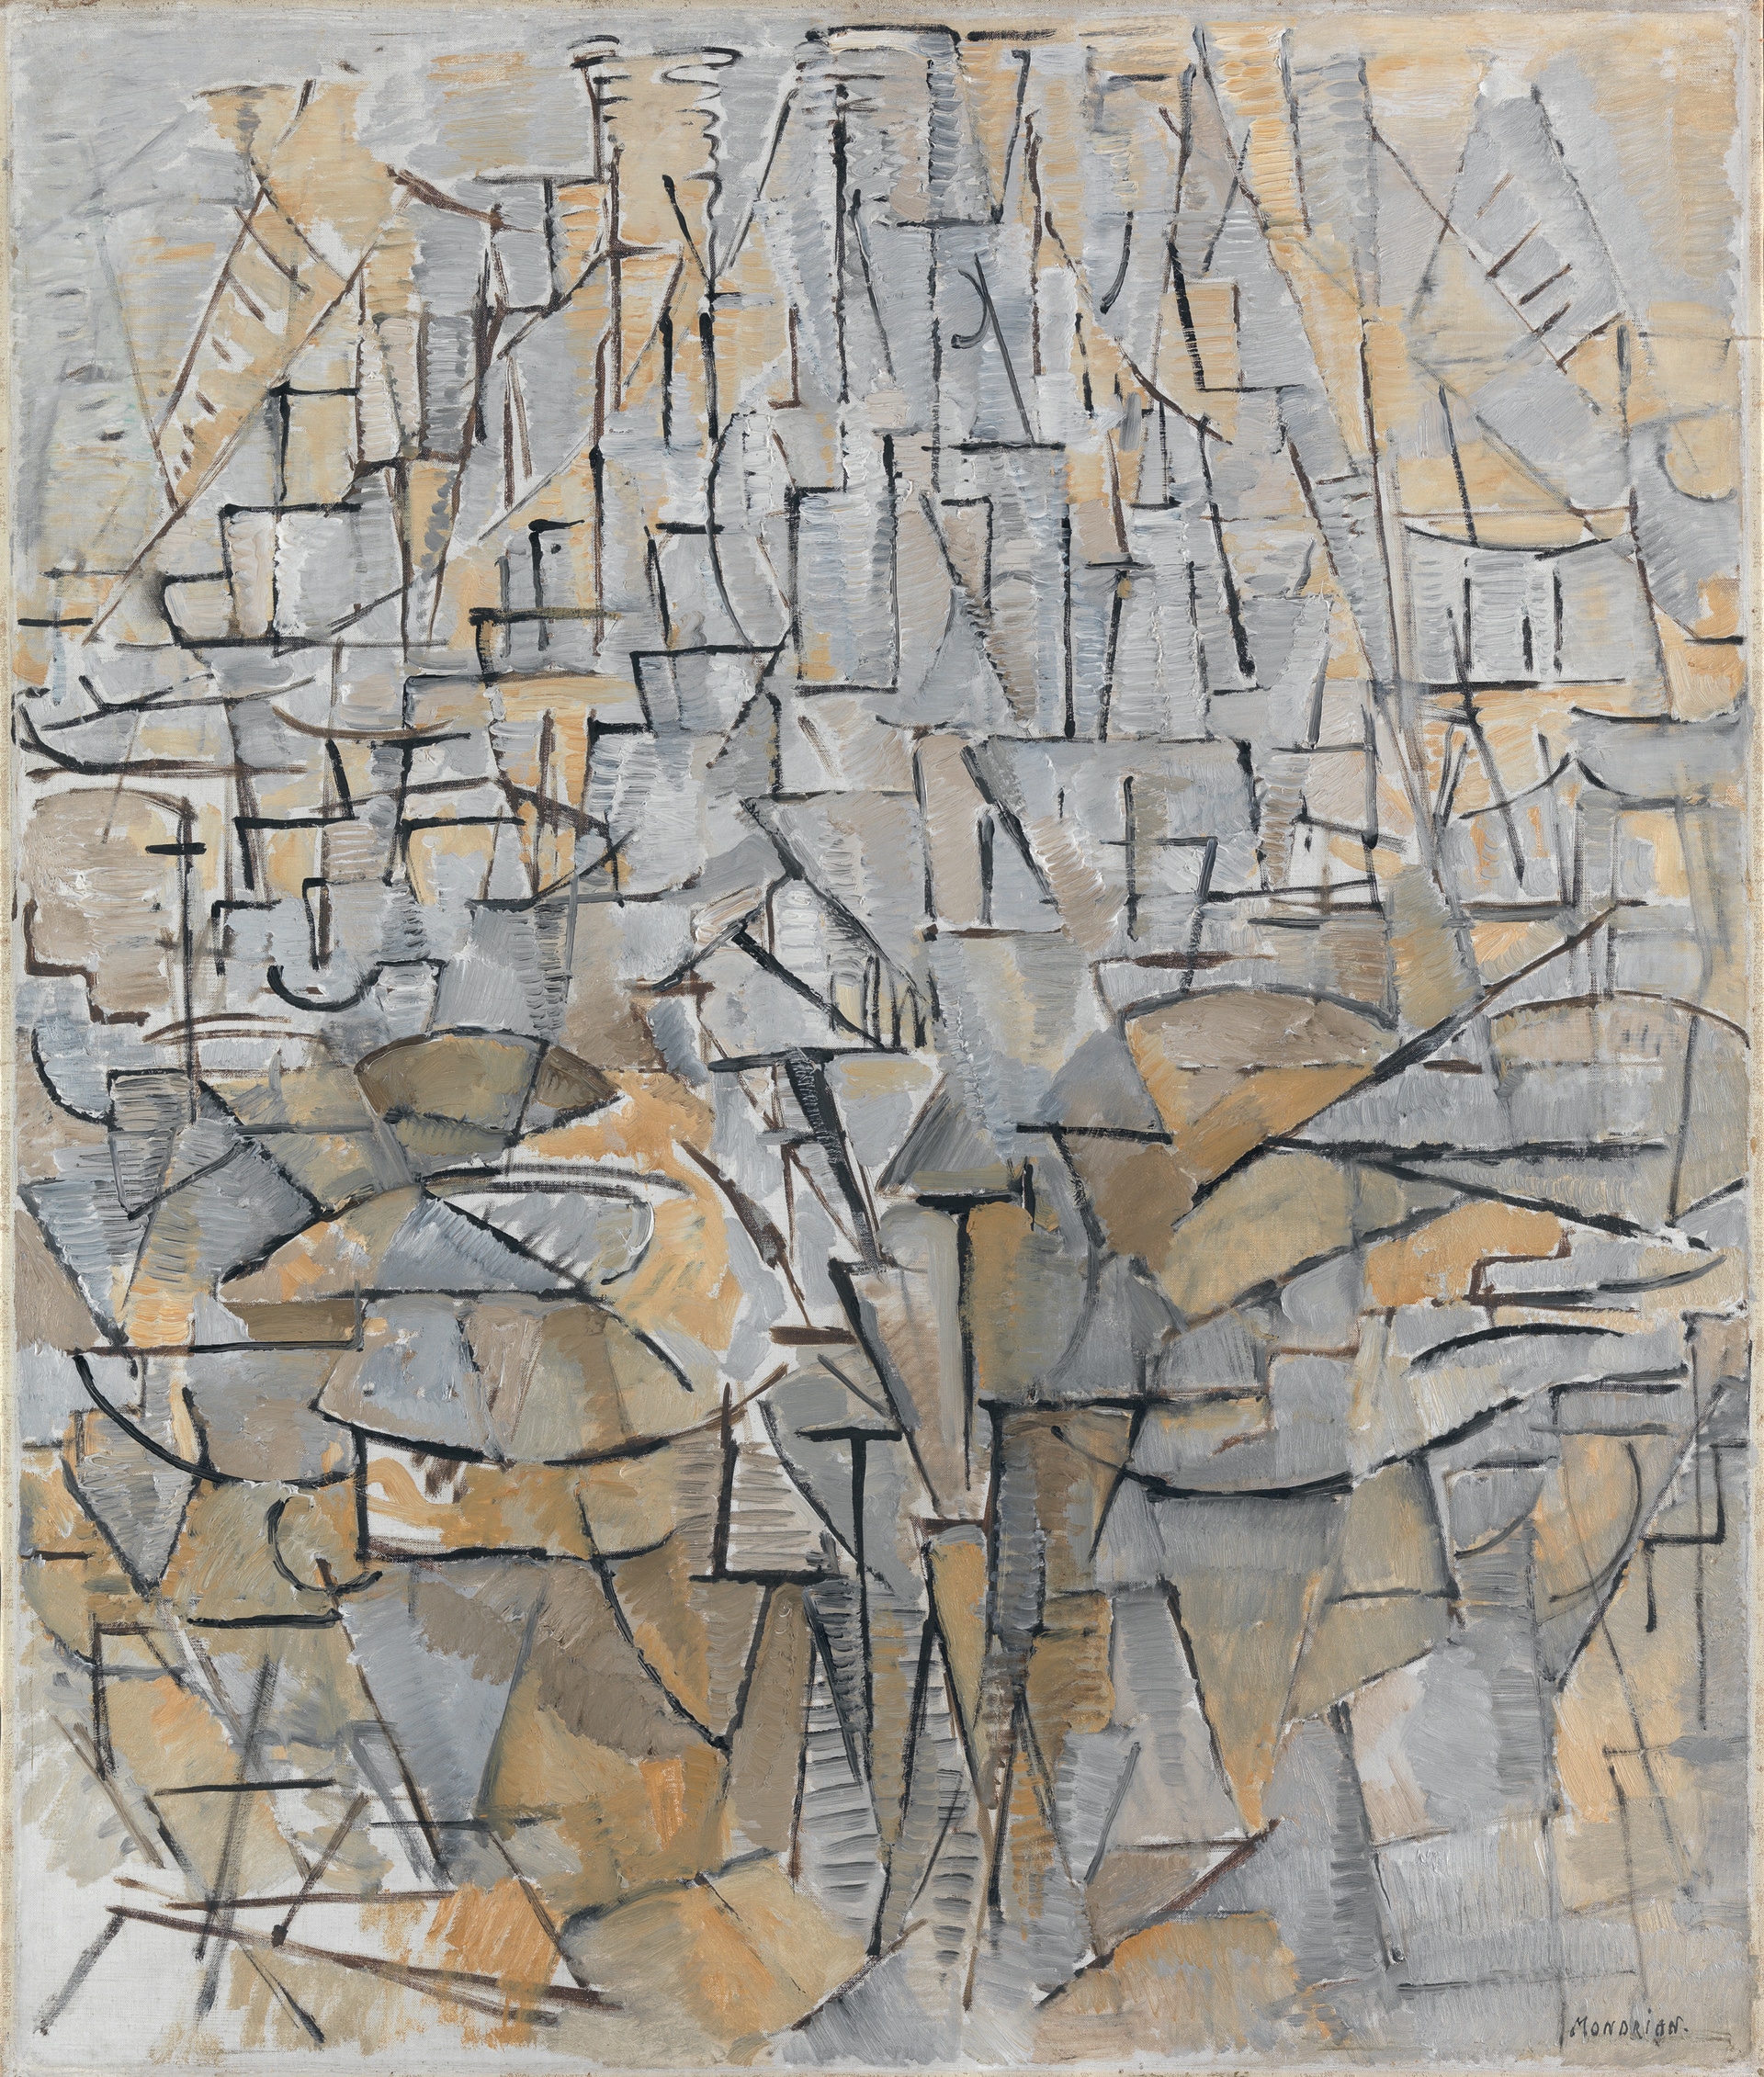 Piet Mondrian (1872-1944): Tableau n. 4 / Composizione n. VIII / Composizione 3, 1913. Olio su tela. Kunstmuseum Den Haag